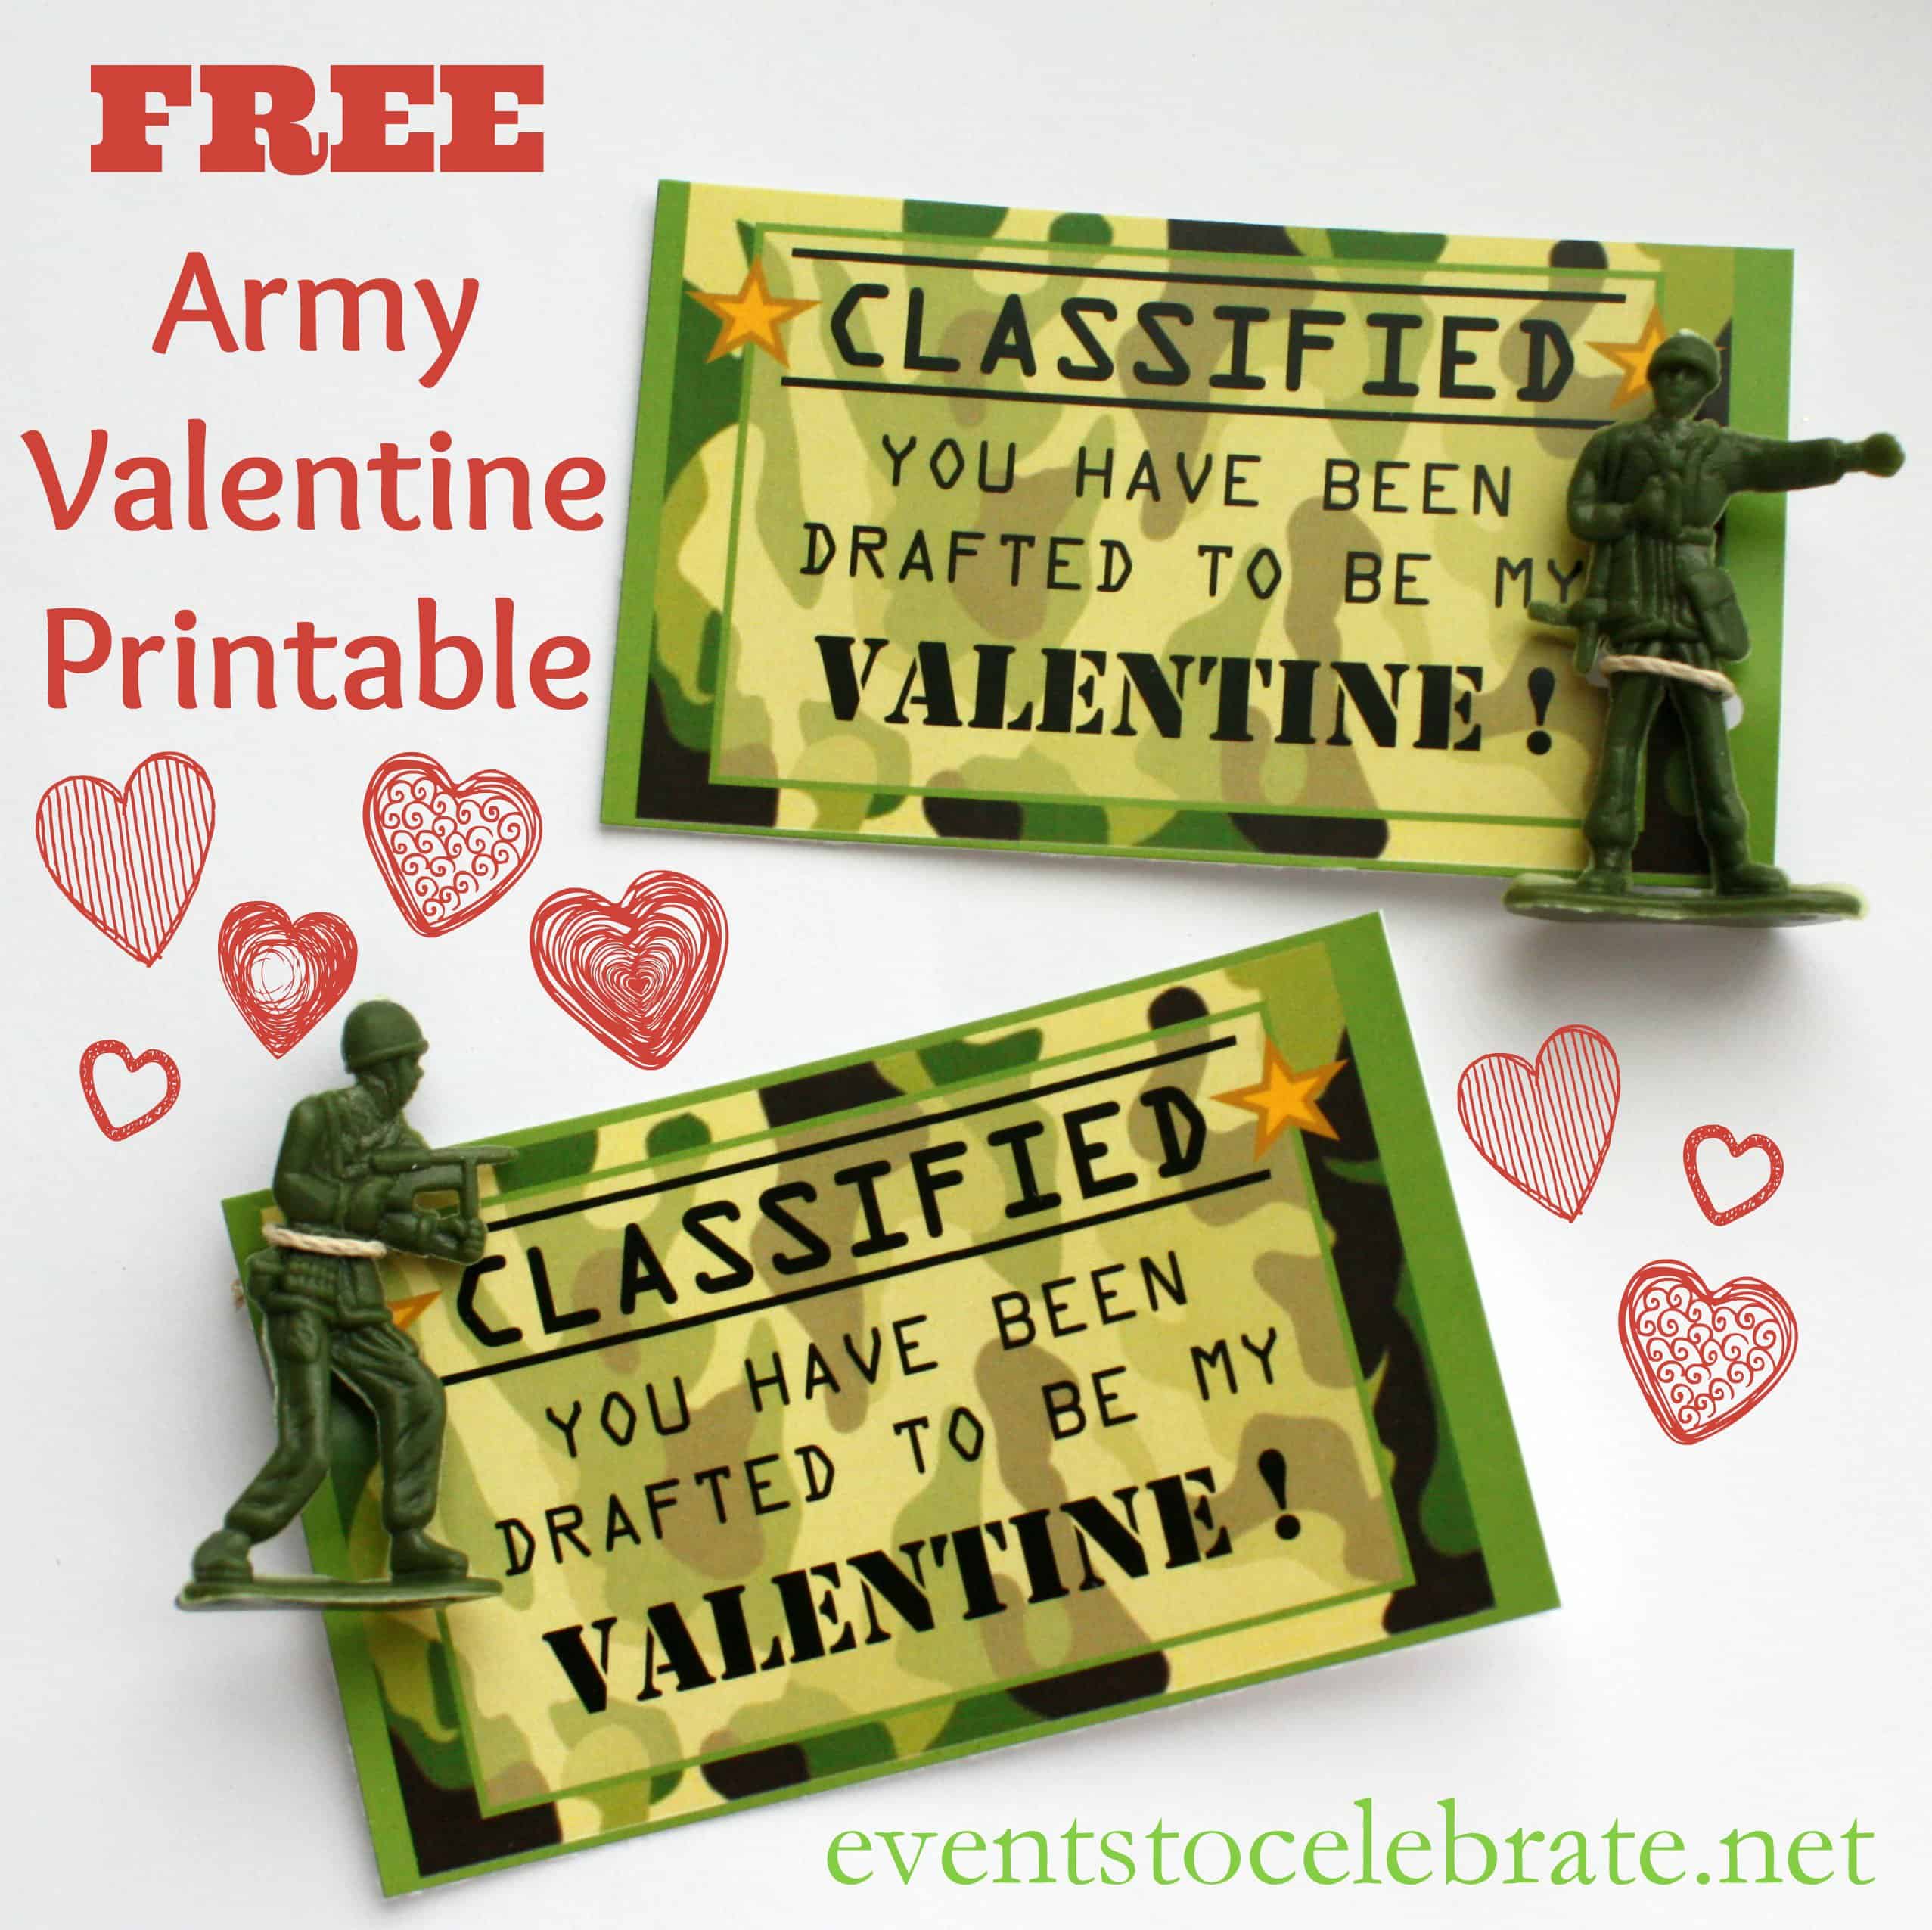 Free Valentine’s Day Printable: Army Valentine